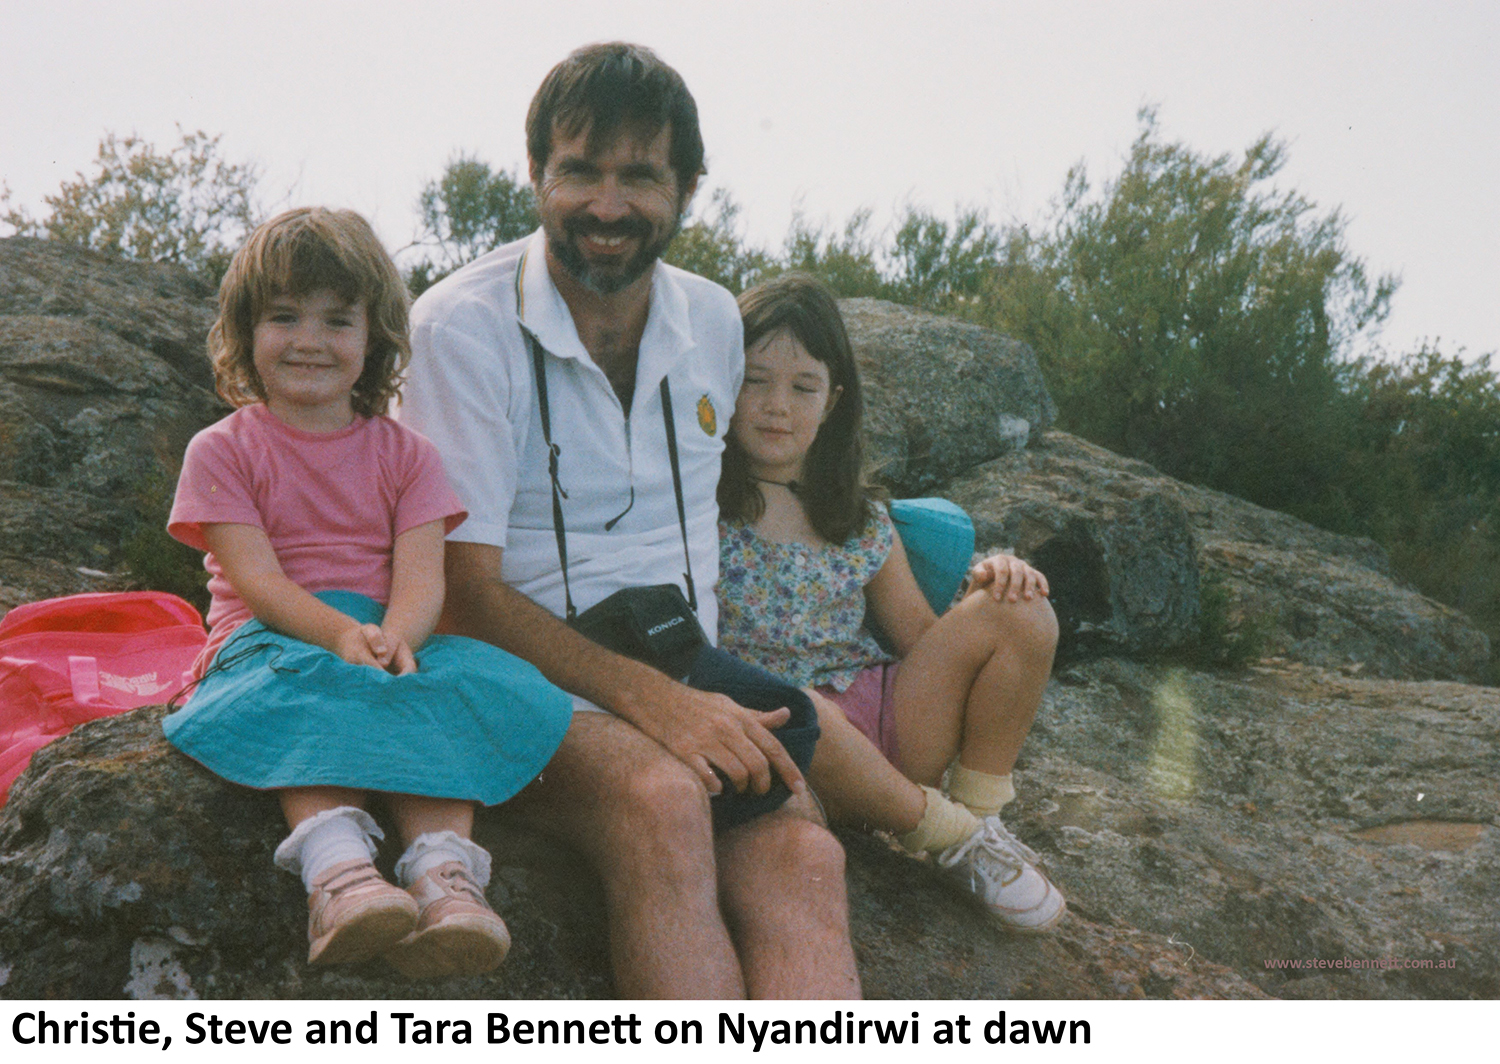 Christie and Tara with Steve Bennett on Nyandirwi at dawn